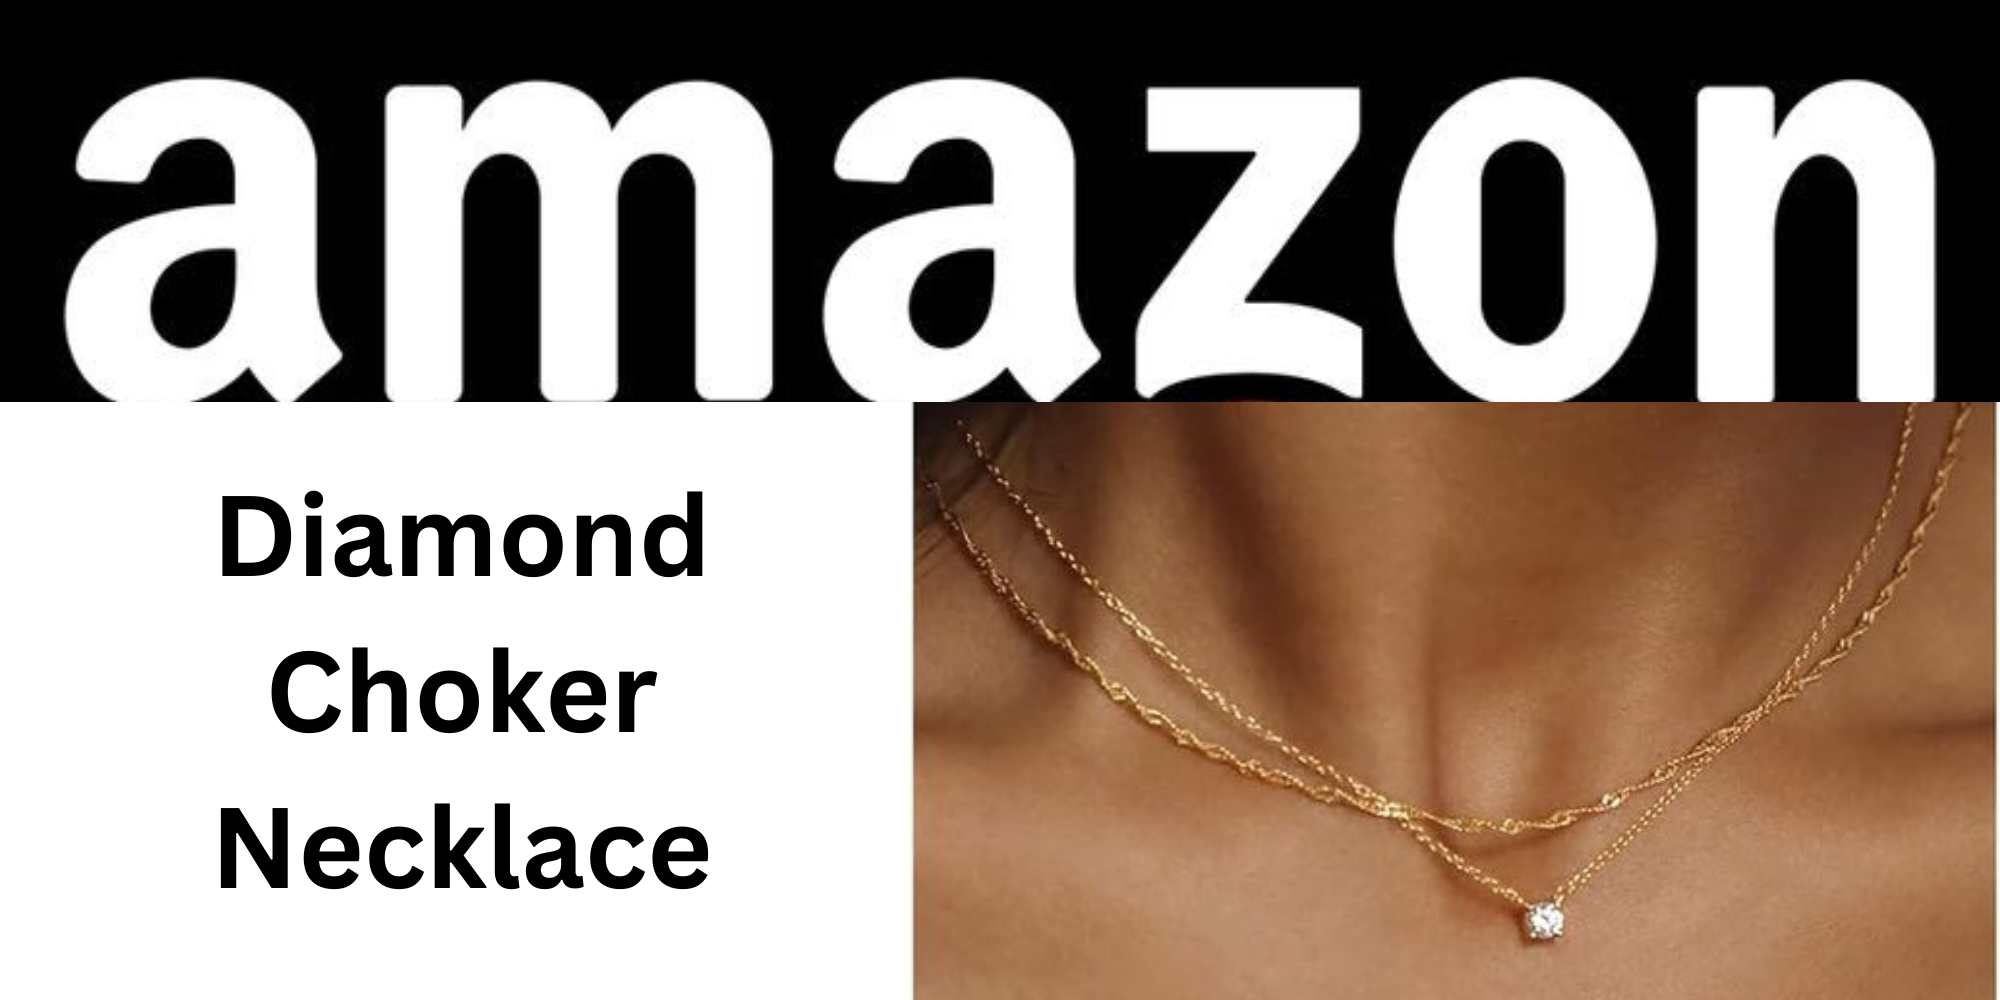 Diamond Choker Necklace click hear to order